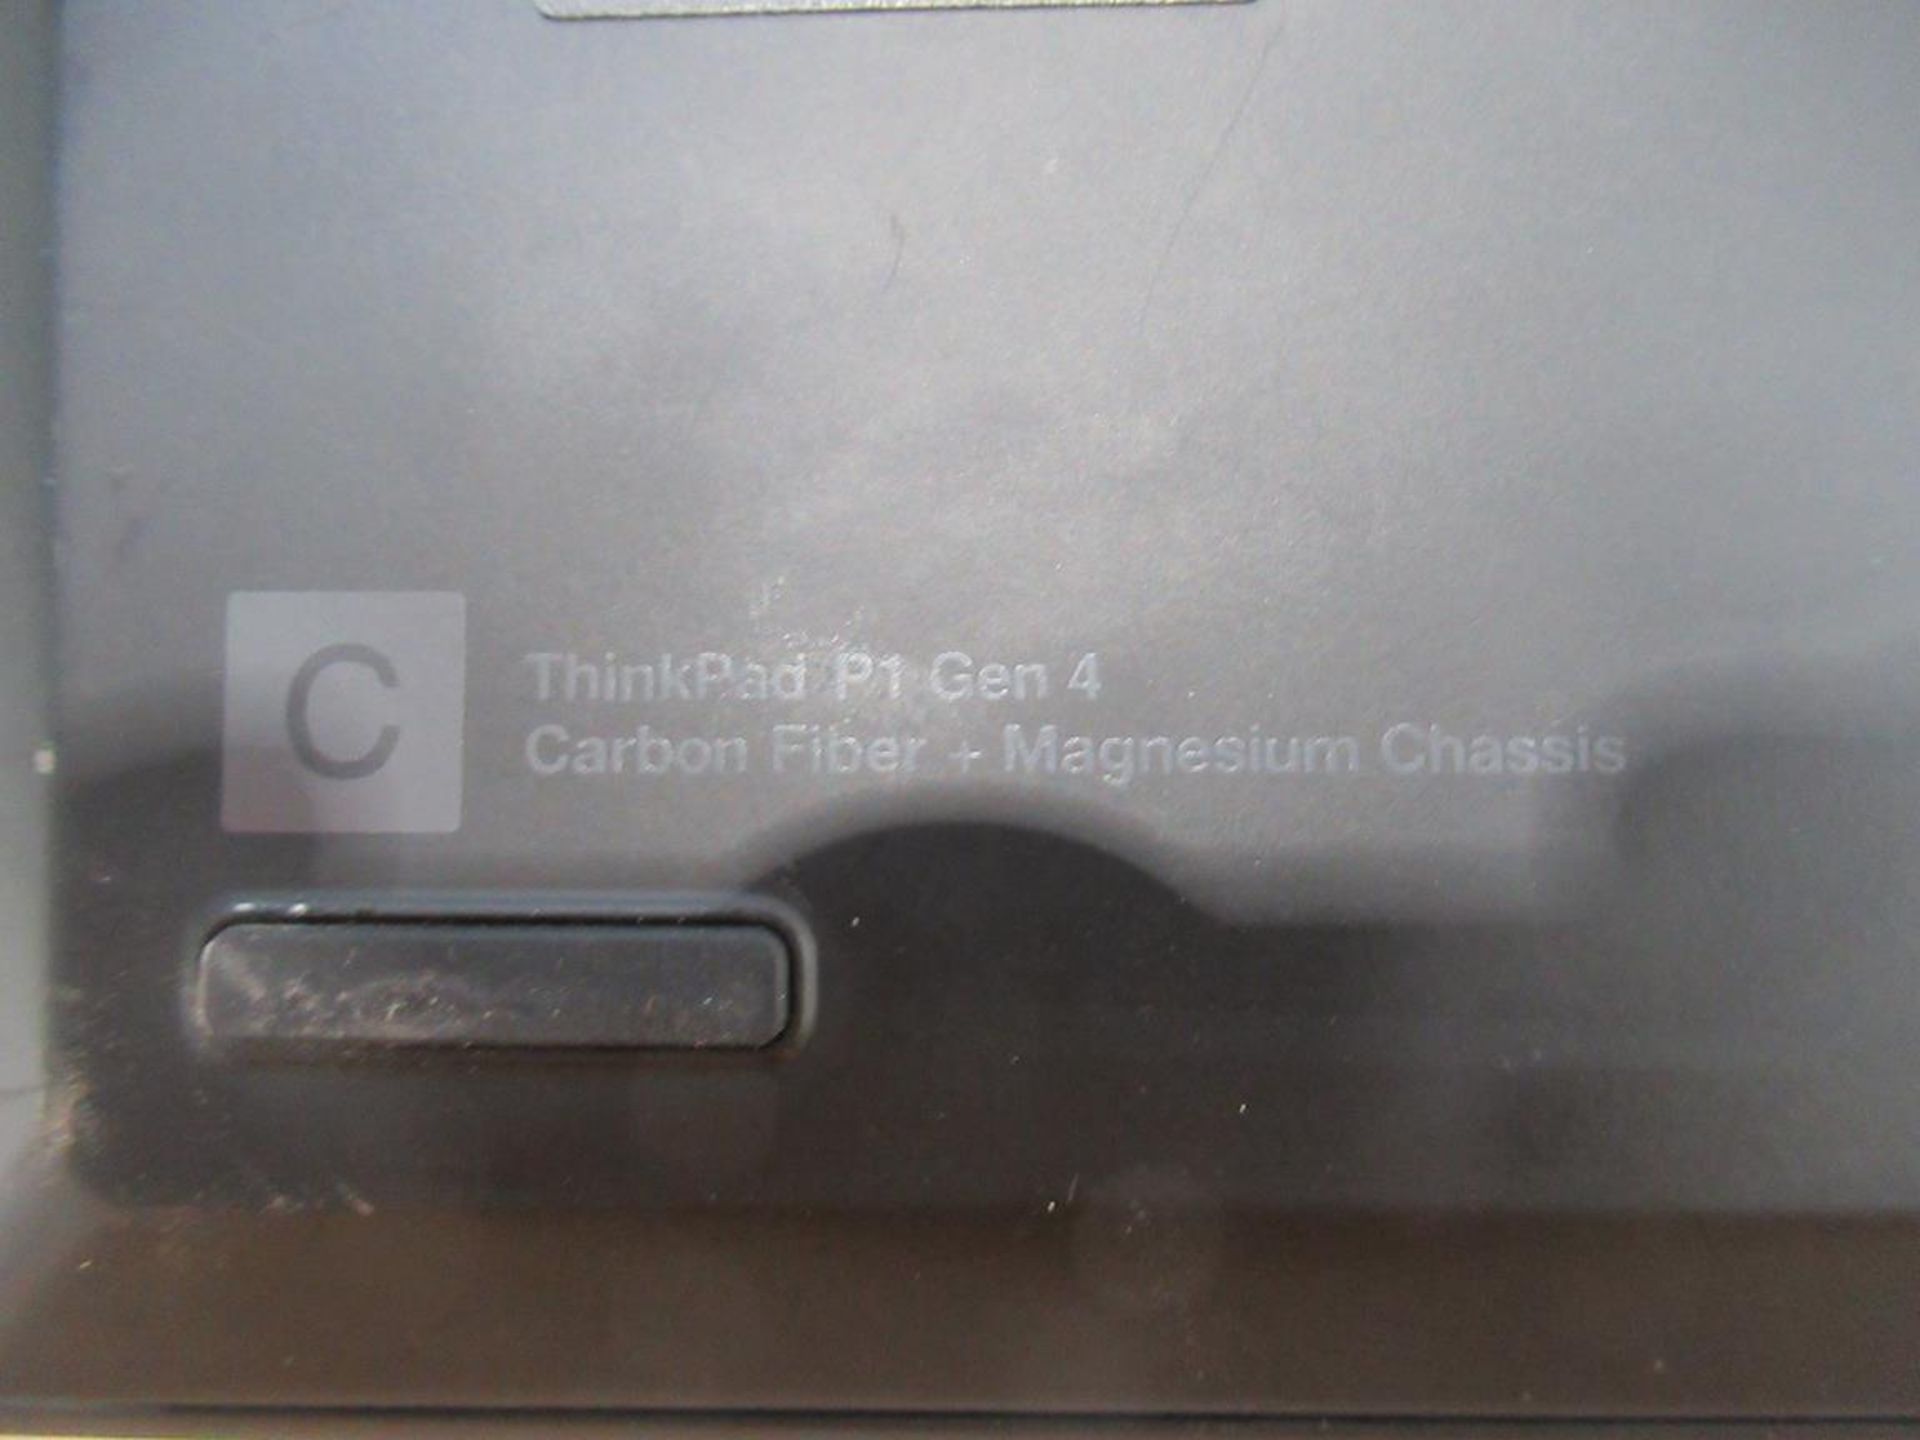 7x (no.) Lenovo, Thinkpad P1 Gen 4 CAD specification - Image 5 of 7